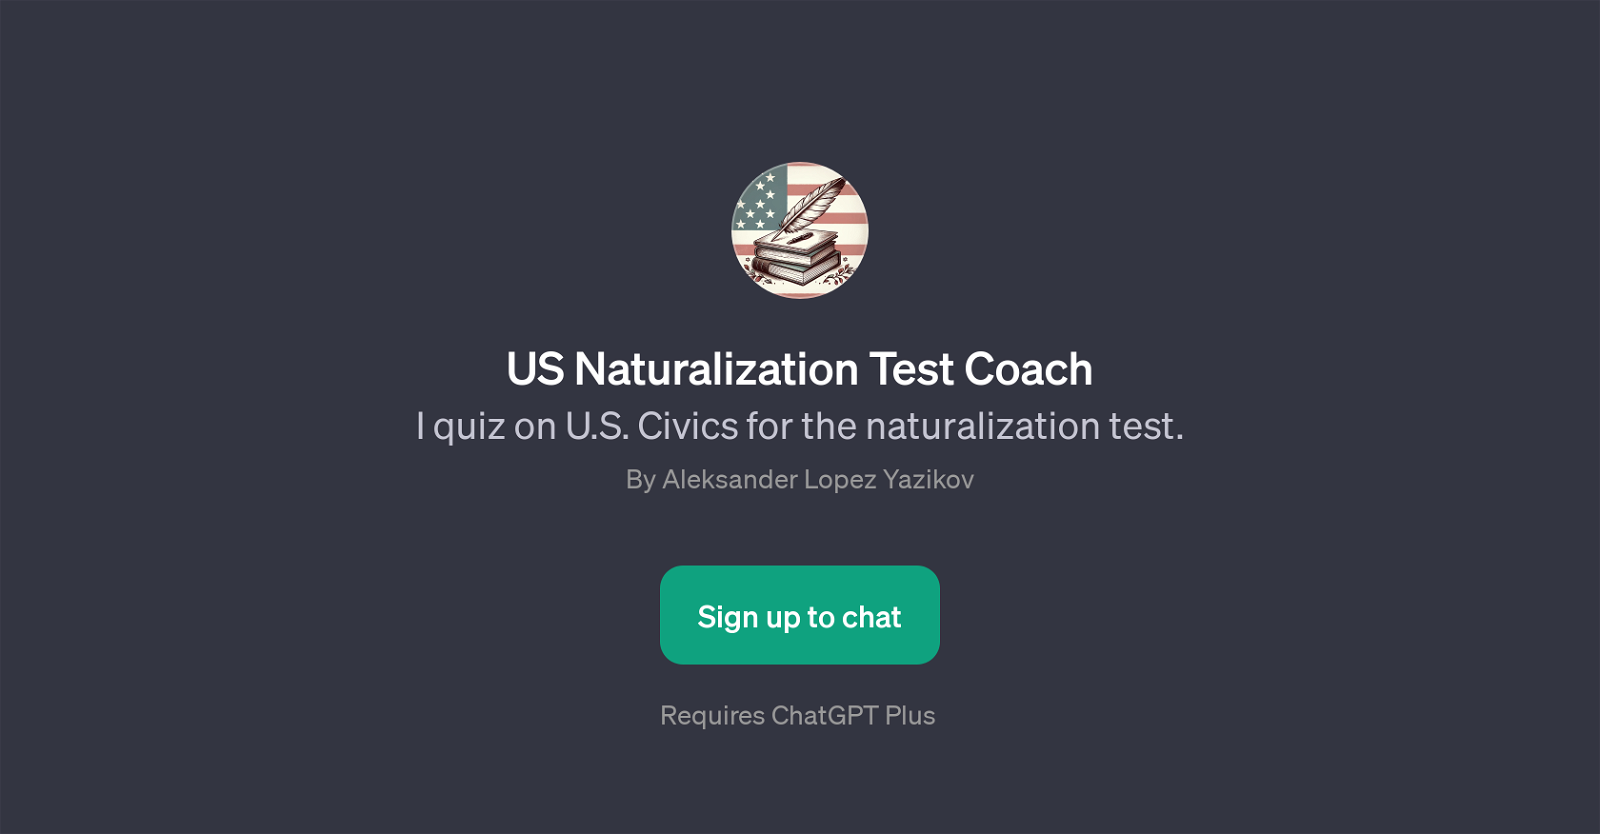 US Naturalization Test Coach website